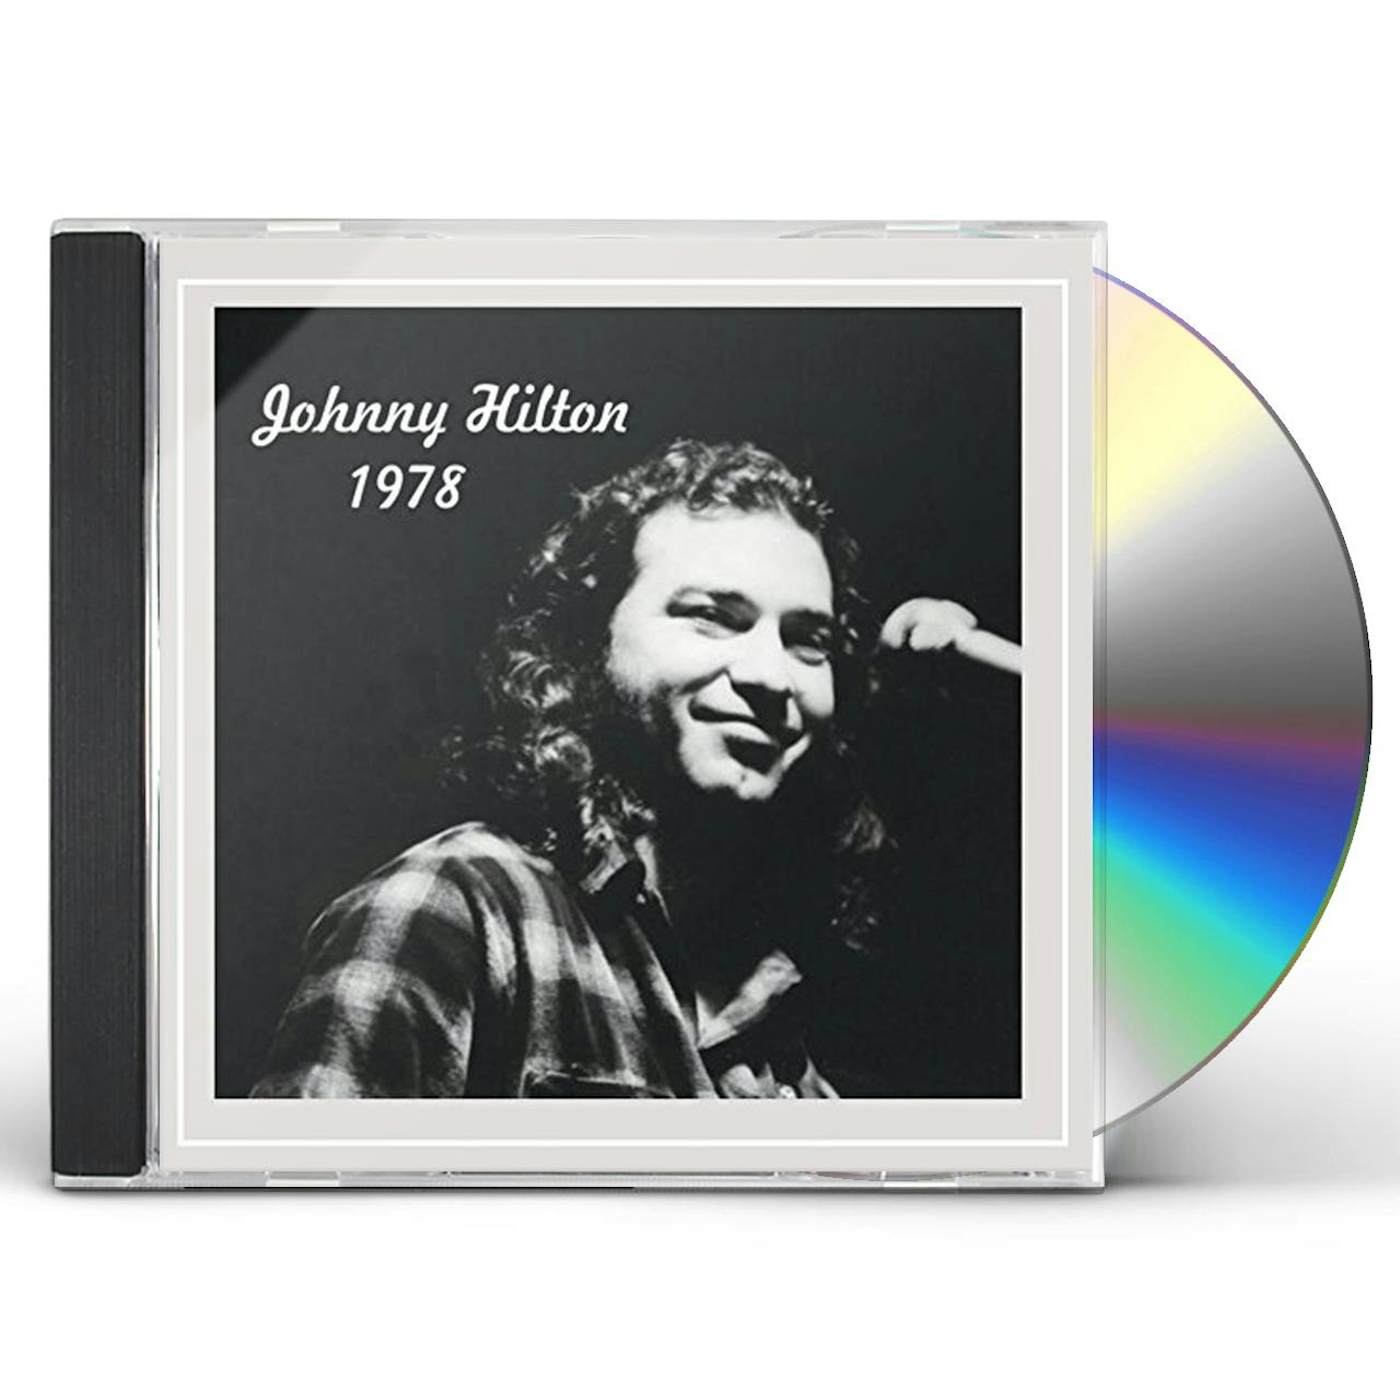 JOHNNY HILTON 1978 CD